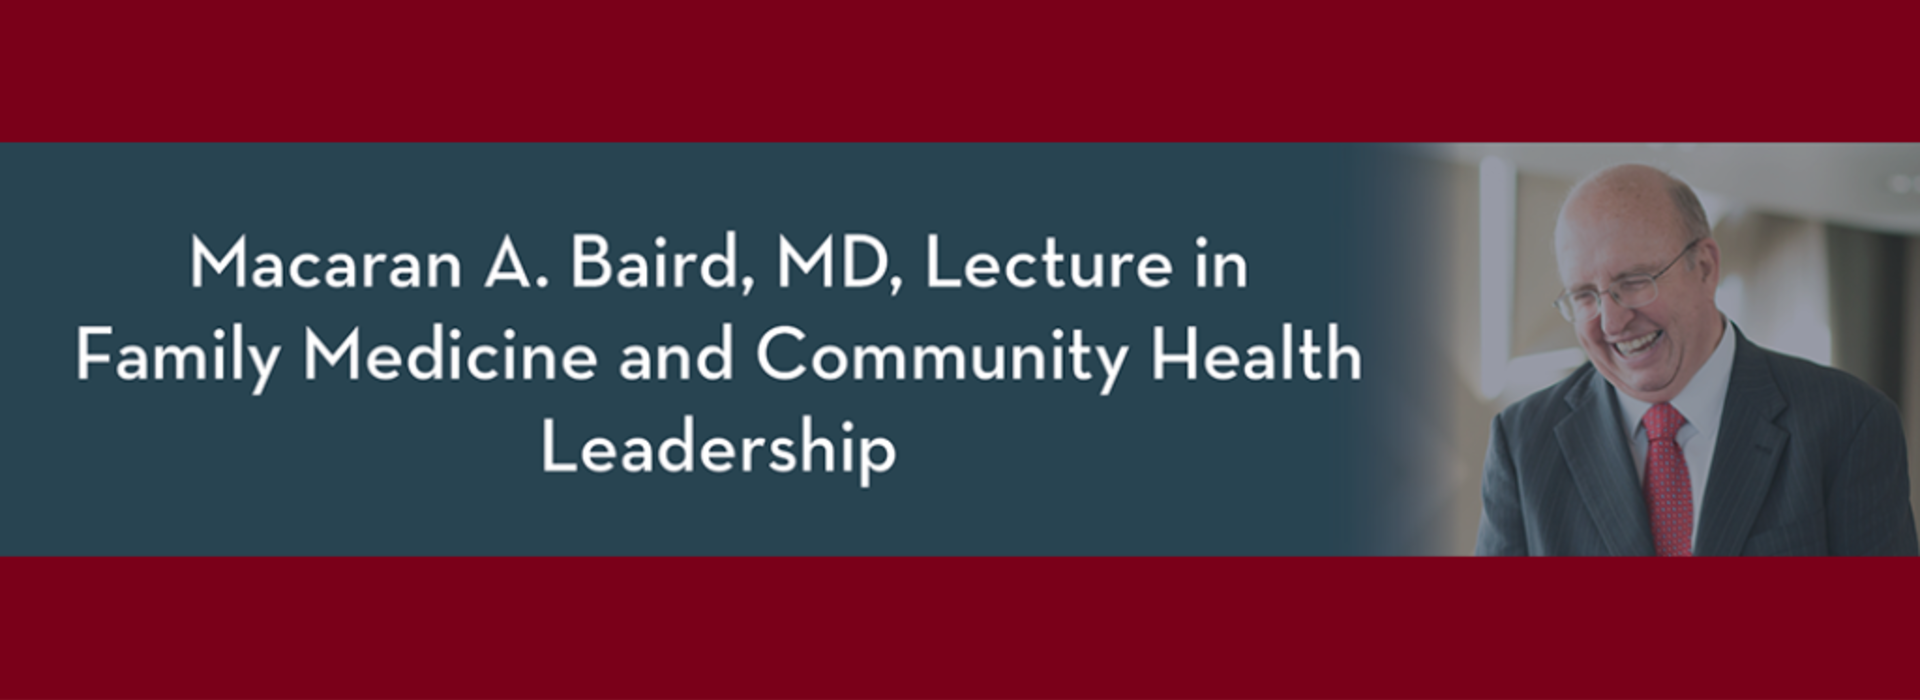 Dr. Macaran A. Baird Lecture